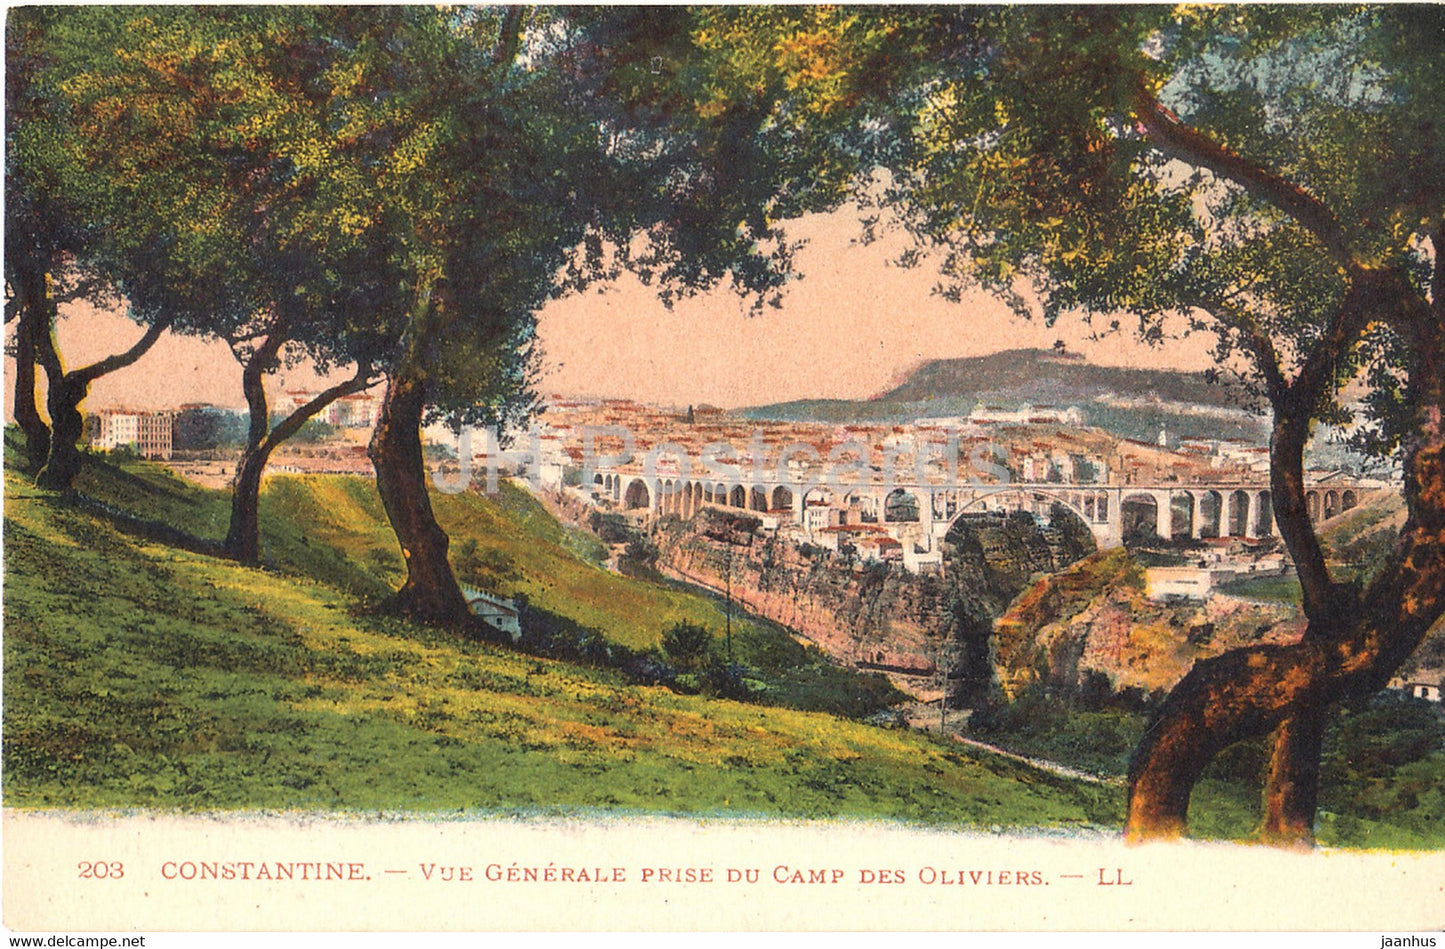 Constantine - Vue Generale prise du Camp des Oliviers - 203 - LL - old postcard - Algeria - unused - JH Postcards